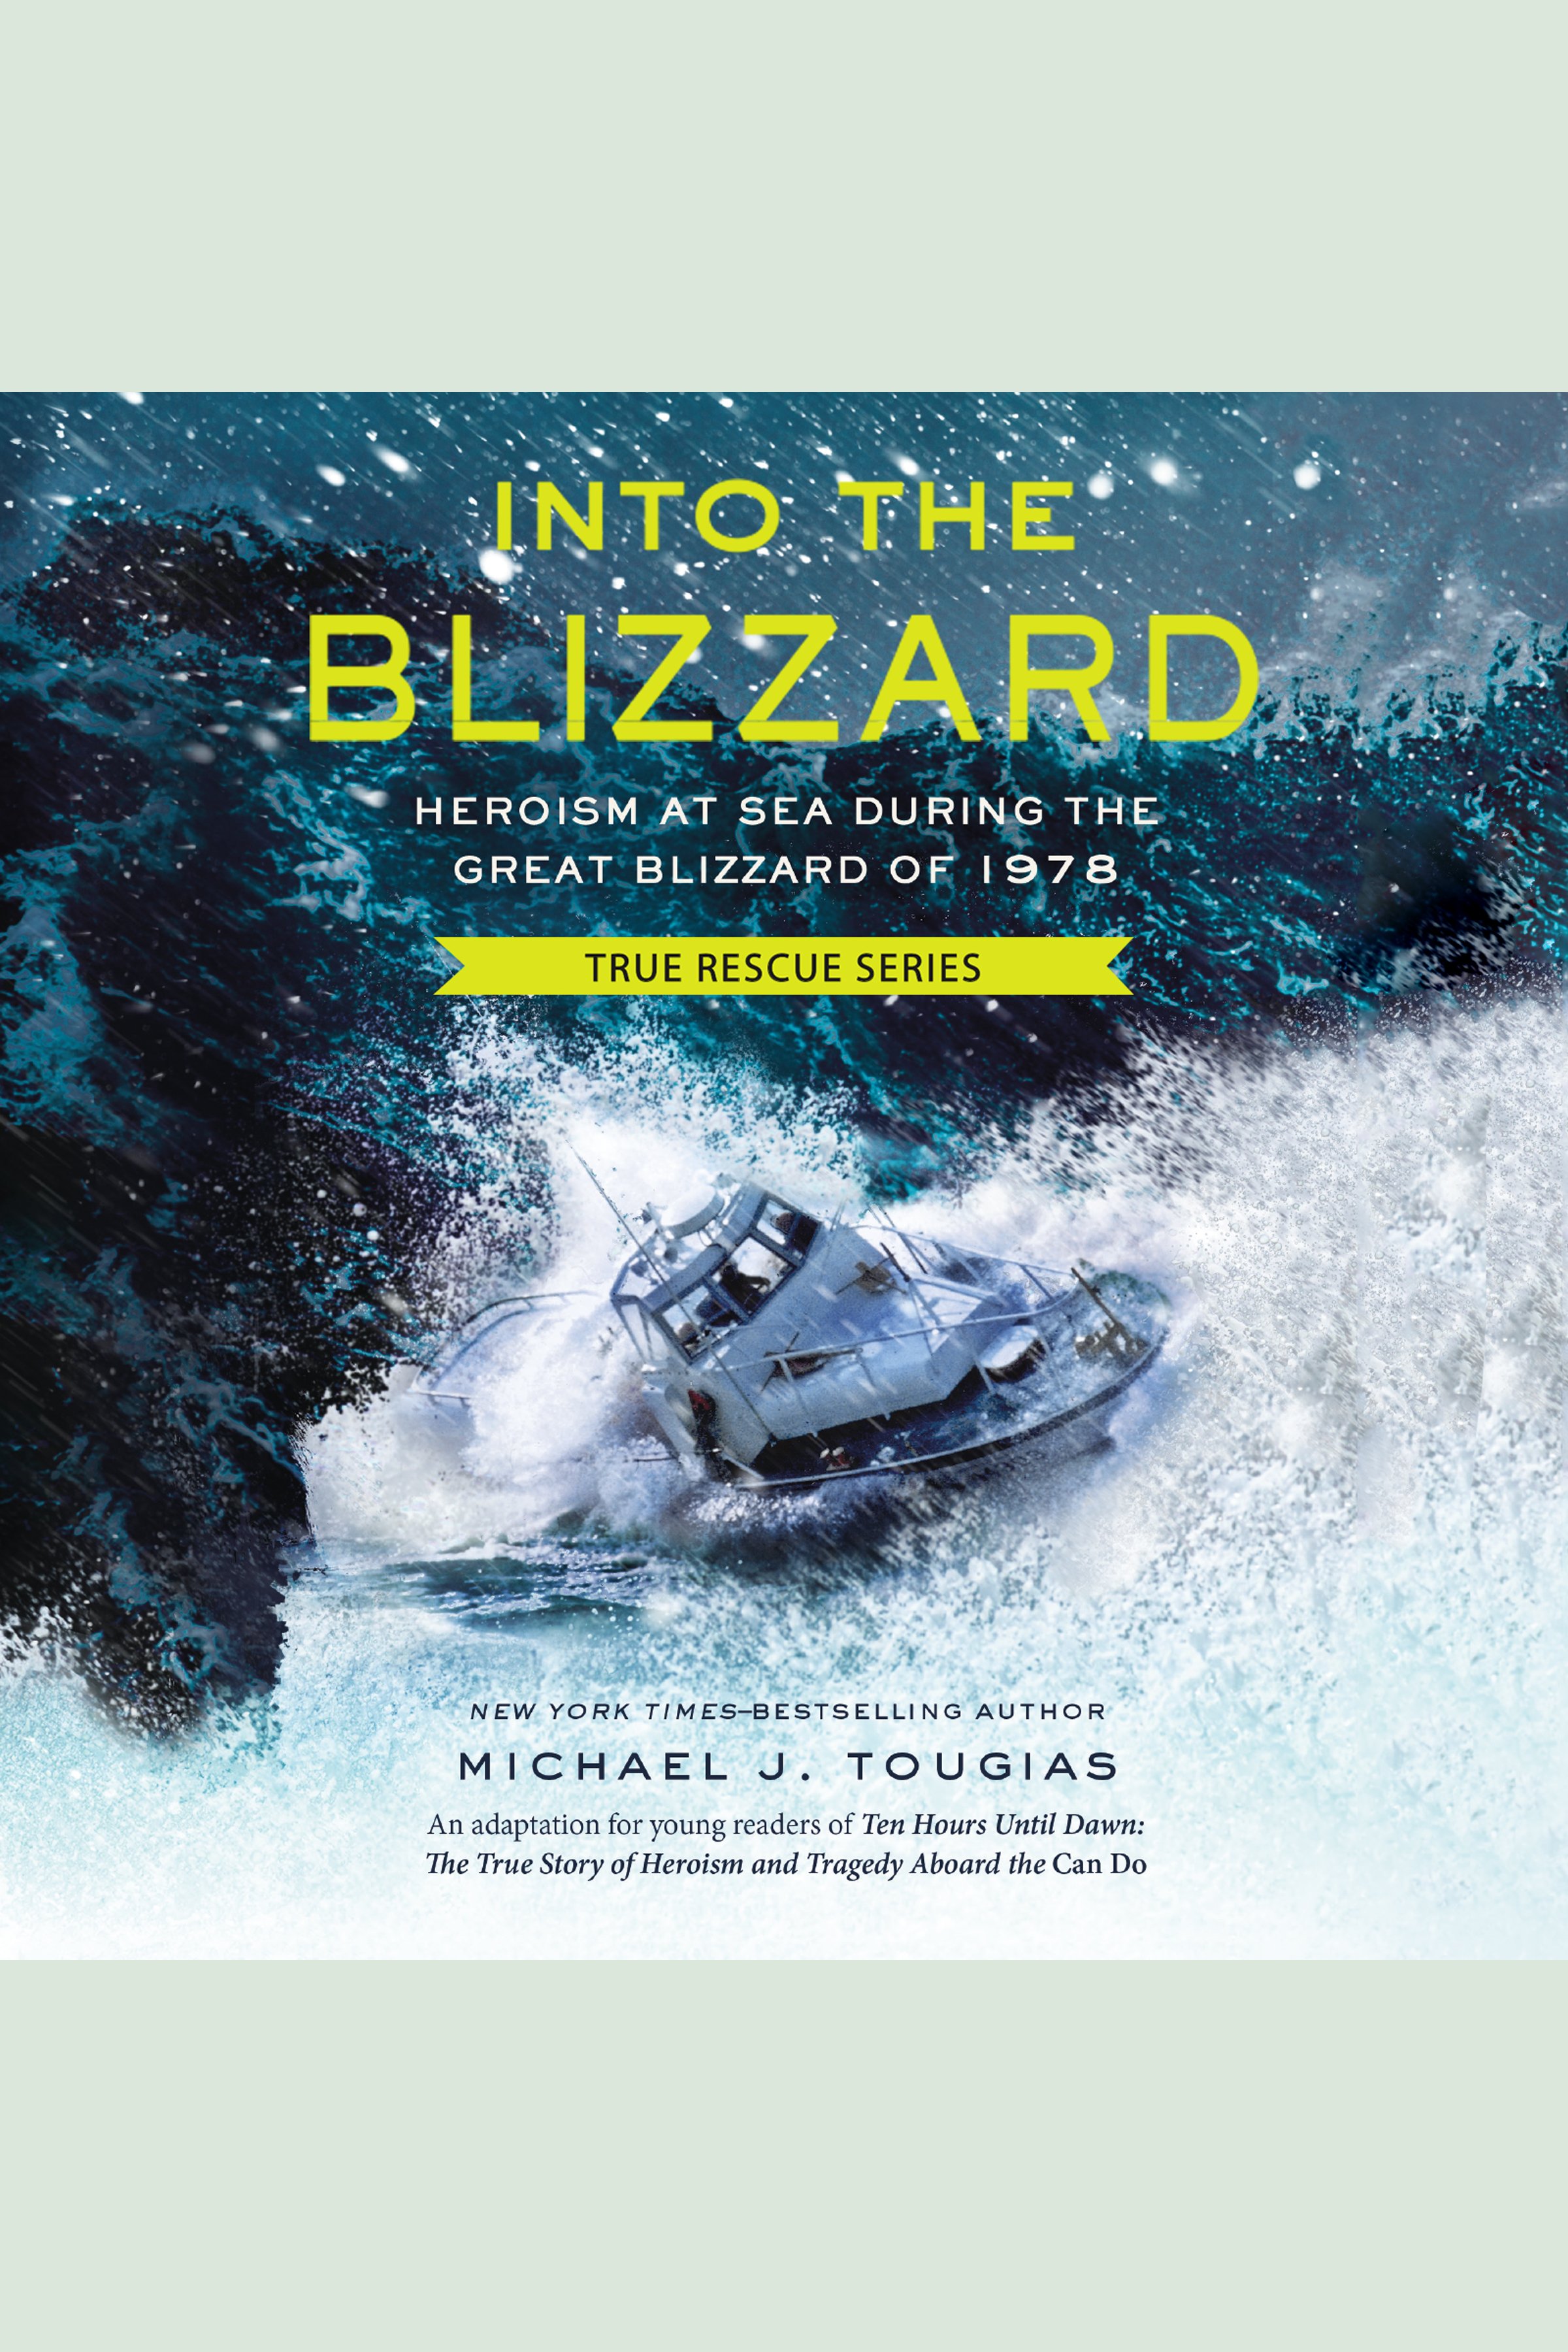 Into the blizzard cover image